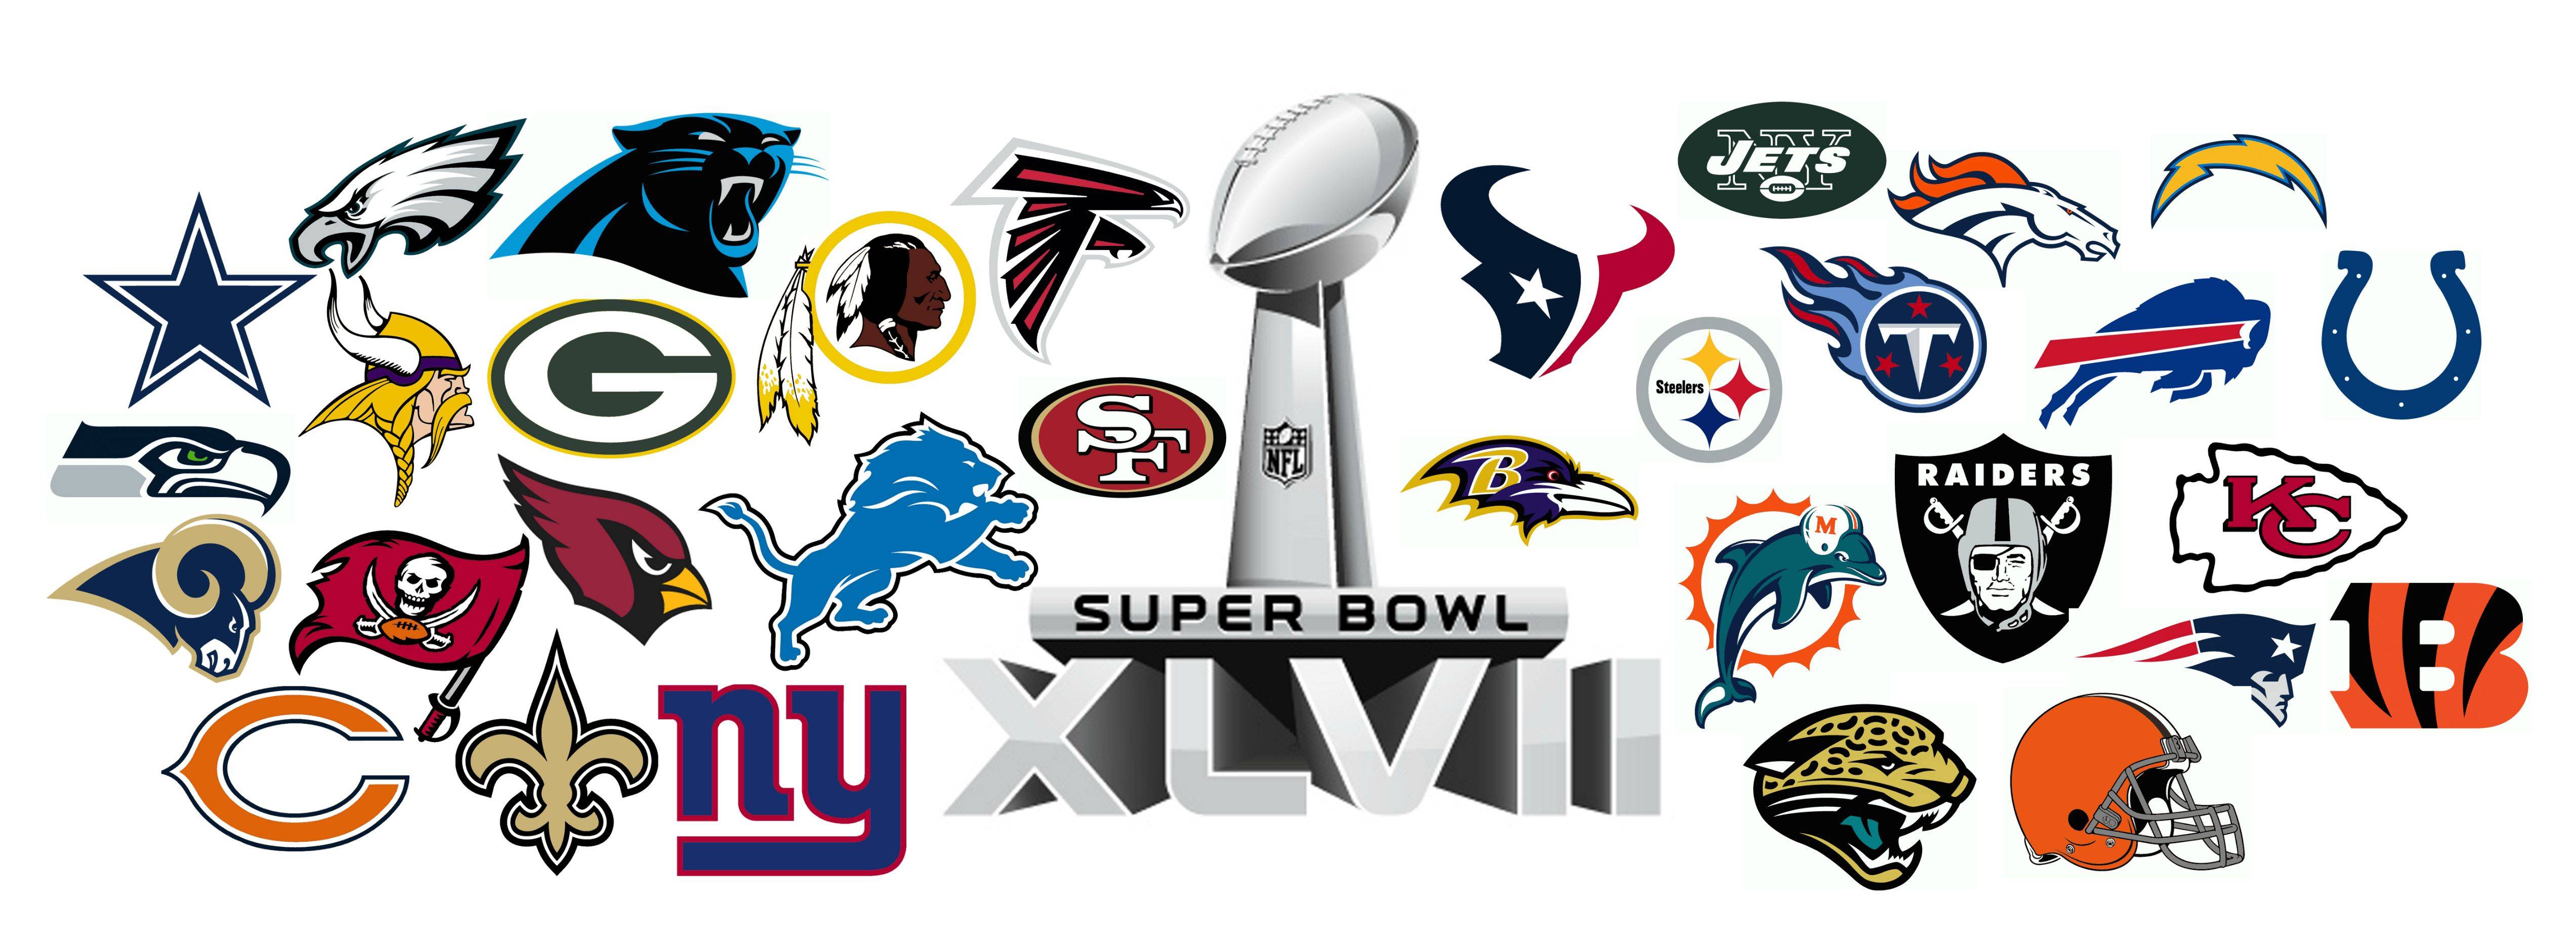 NFL American Football Logo - The Philadelphia Eagles logo is the only NFL team logo facing left